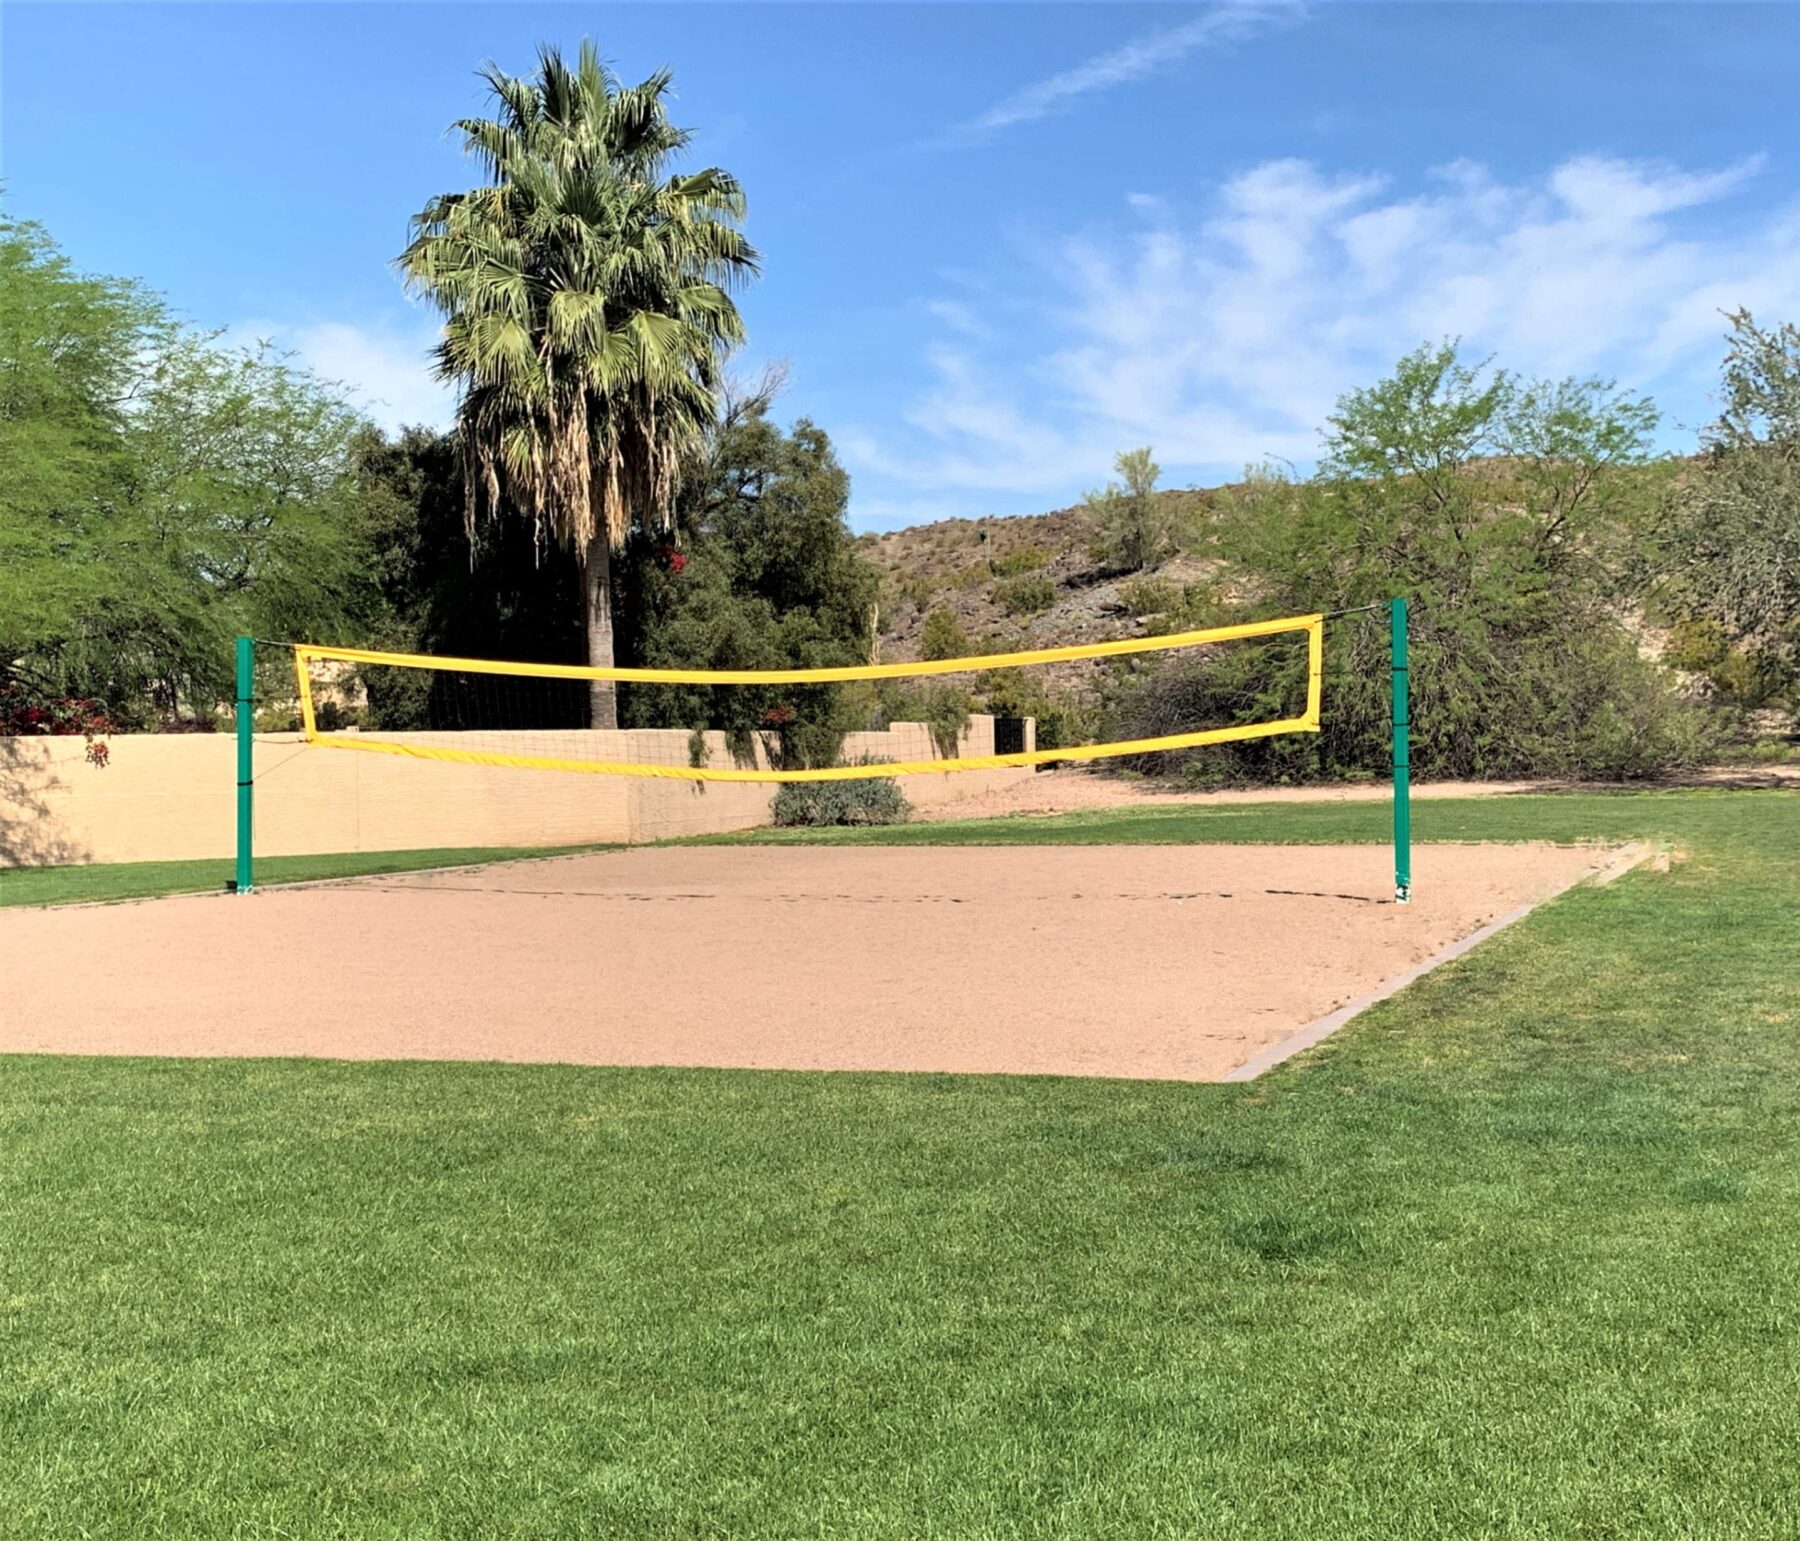 Sand volleyball court